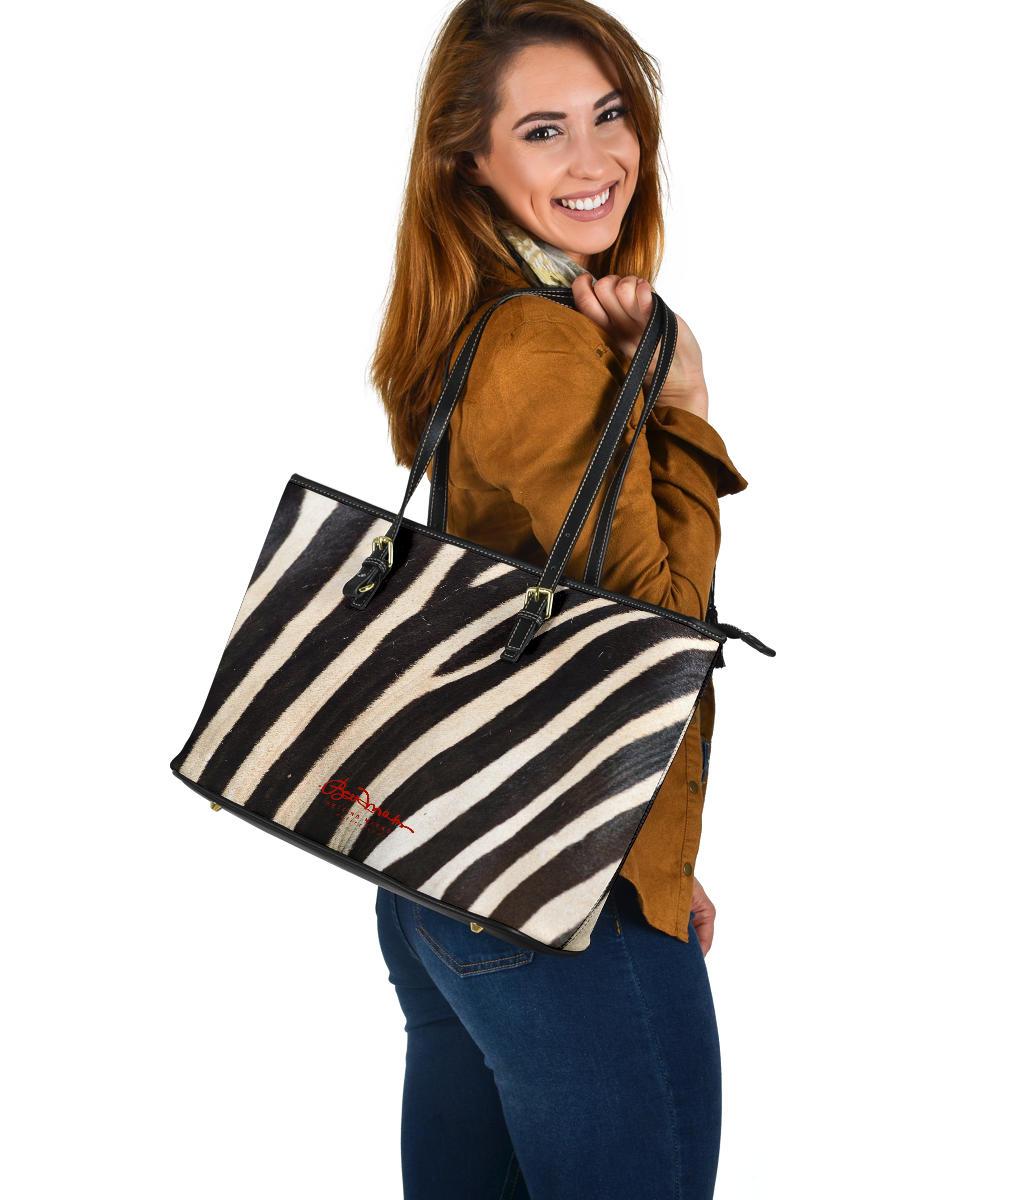 Wild (select color) Zebra Large Tote Bag